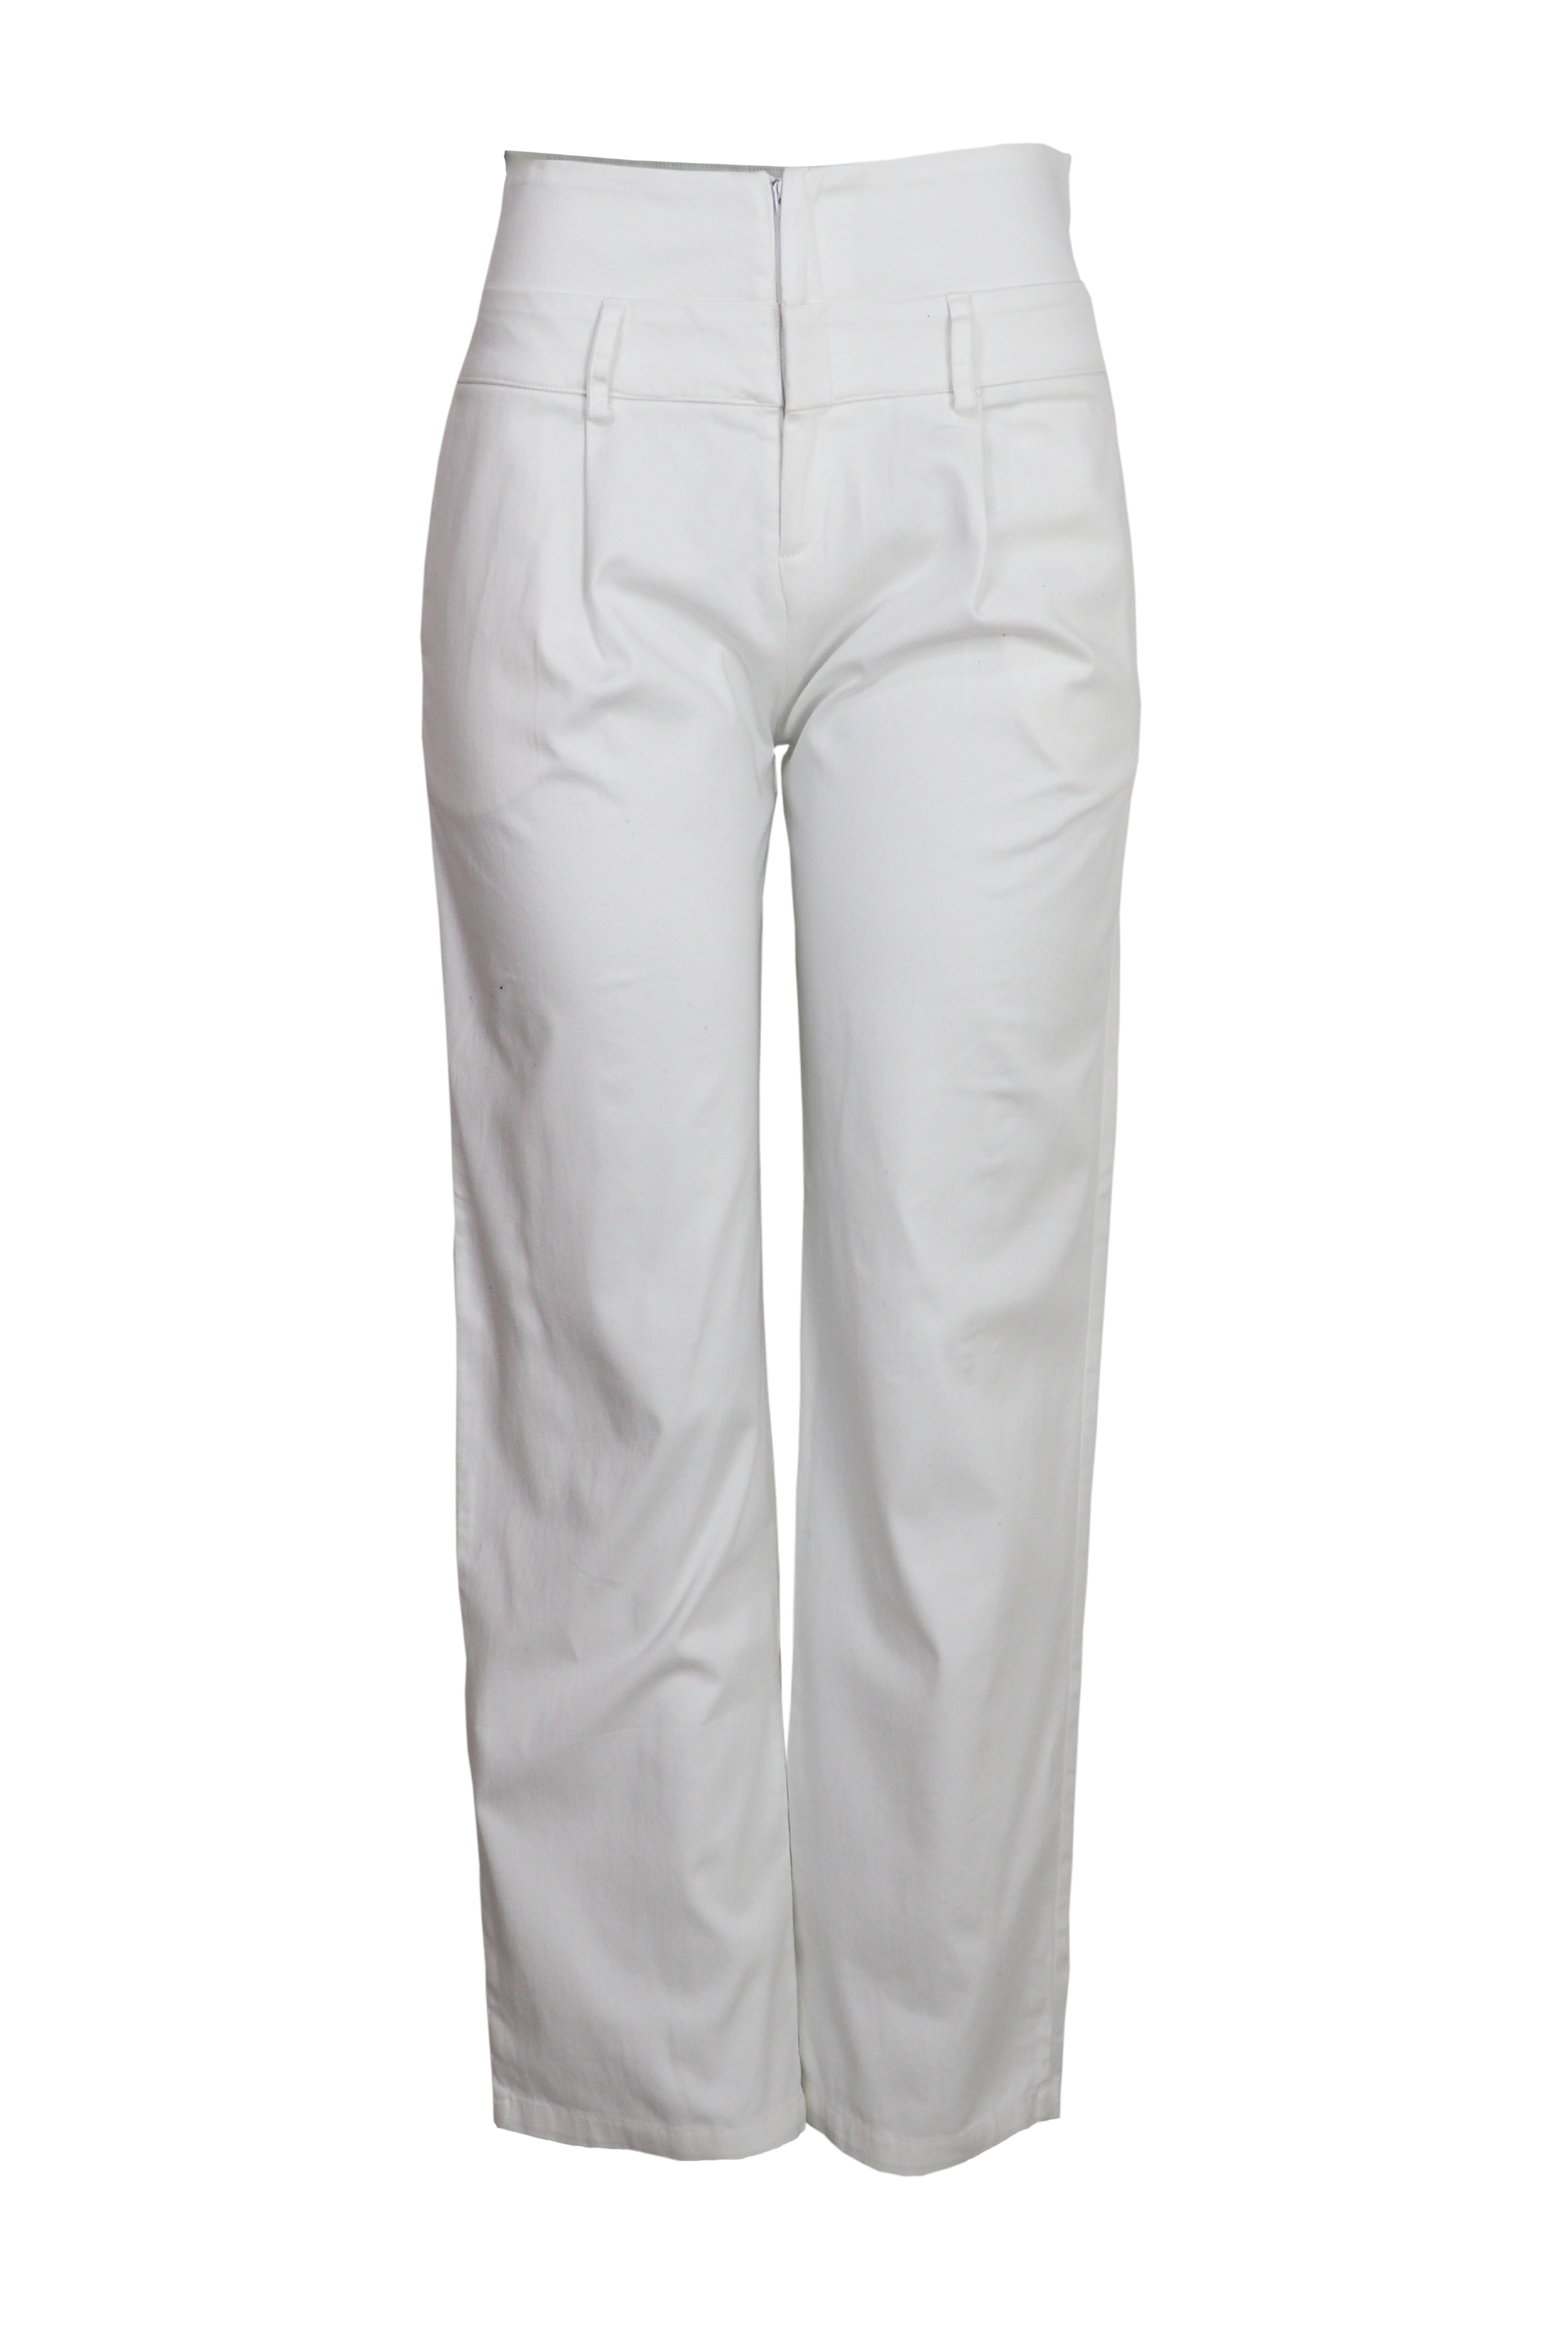 Pantalón de doble pretina Mirage color blanco